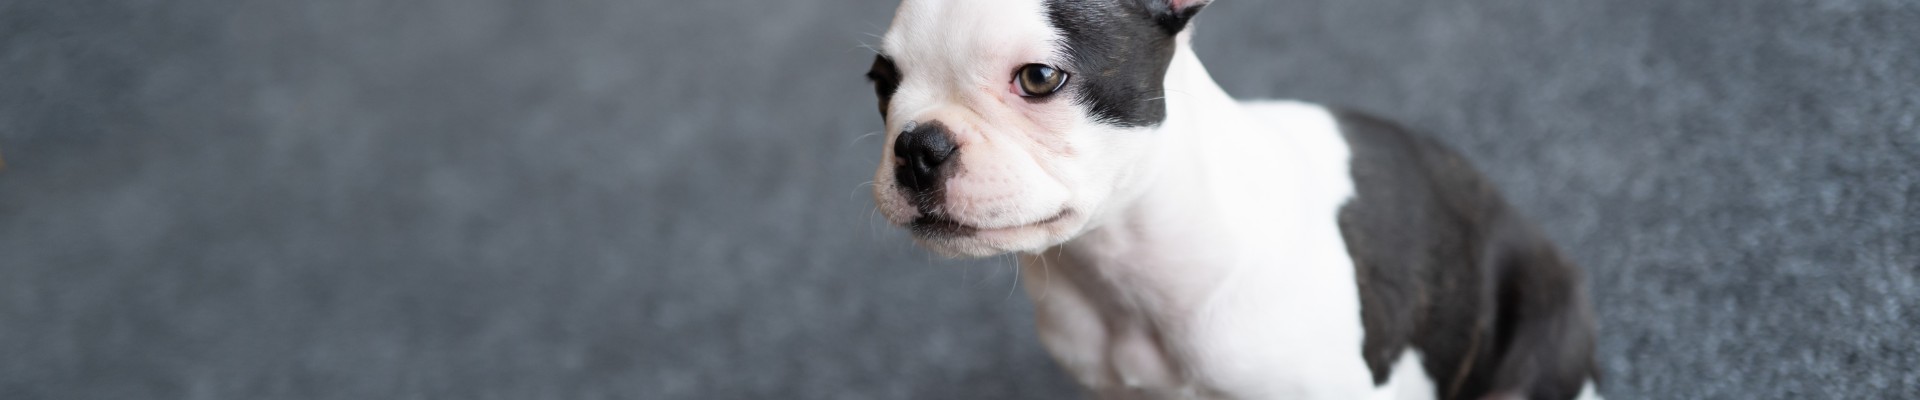 black and white pitbull puppy